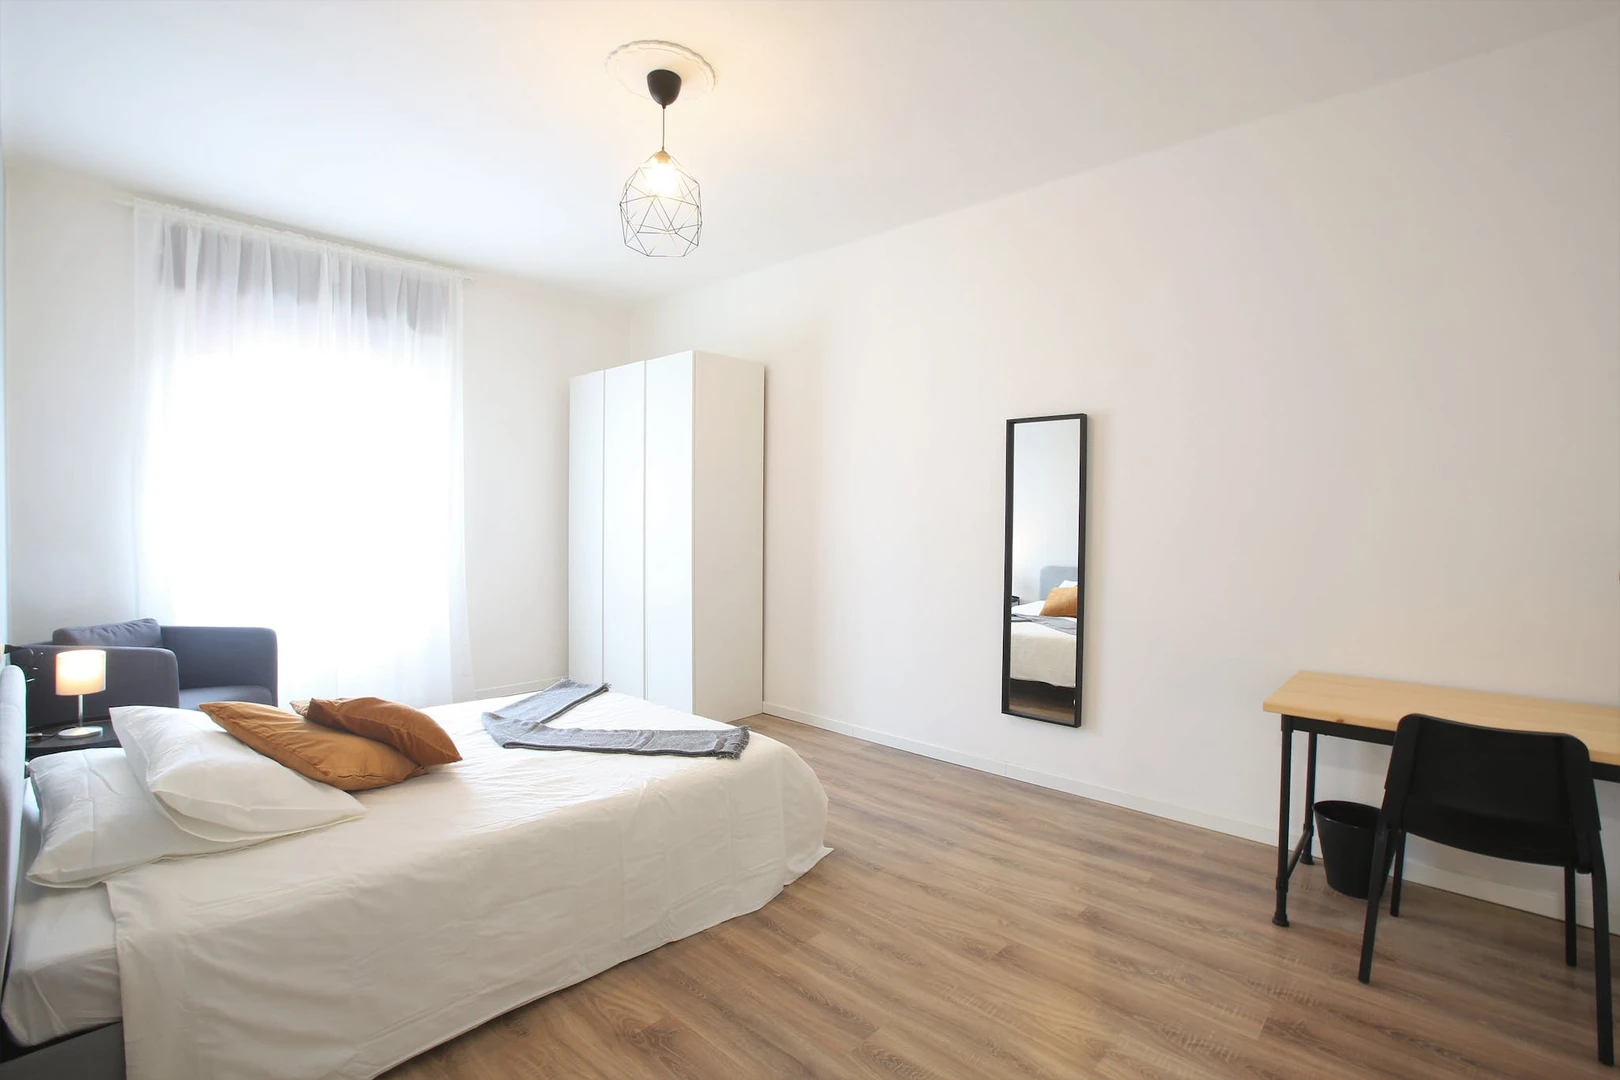 Cheap private room in Modena